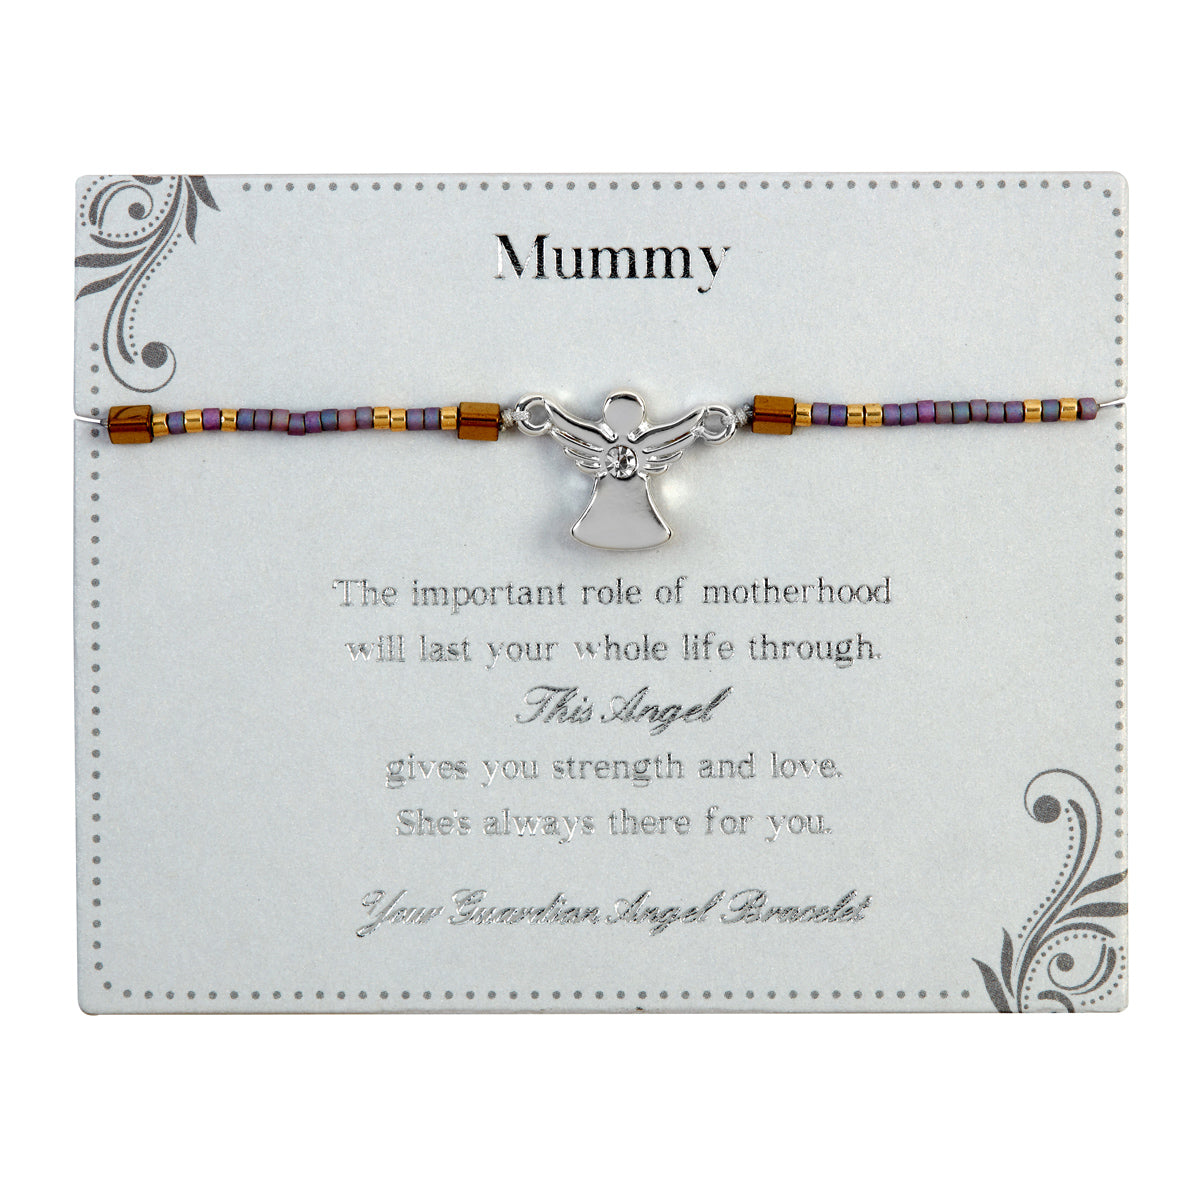 Mummy Guardian Angel Bracelet On Beaded String With Envelope